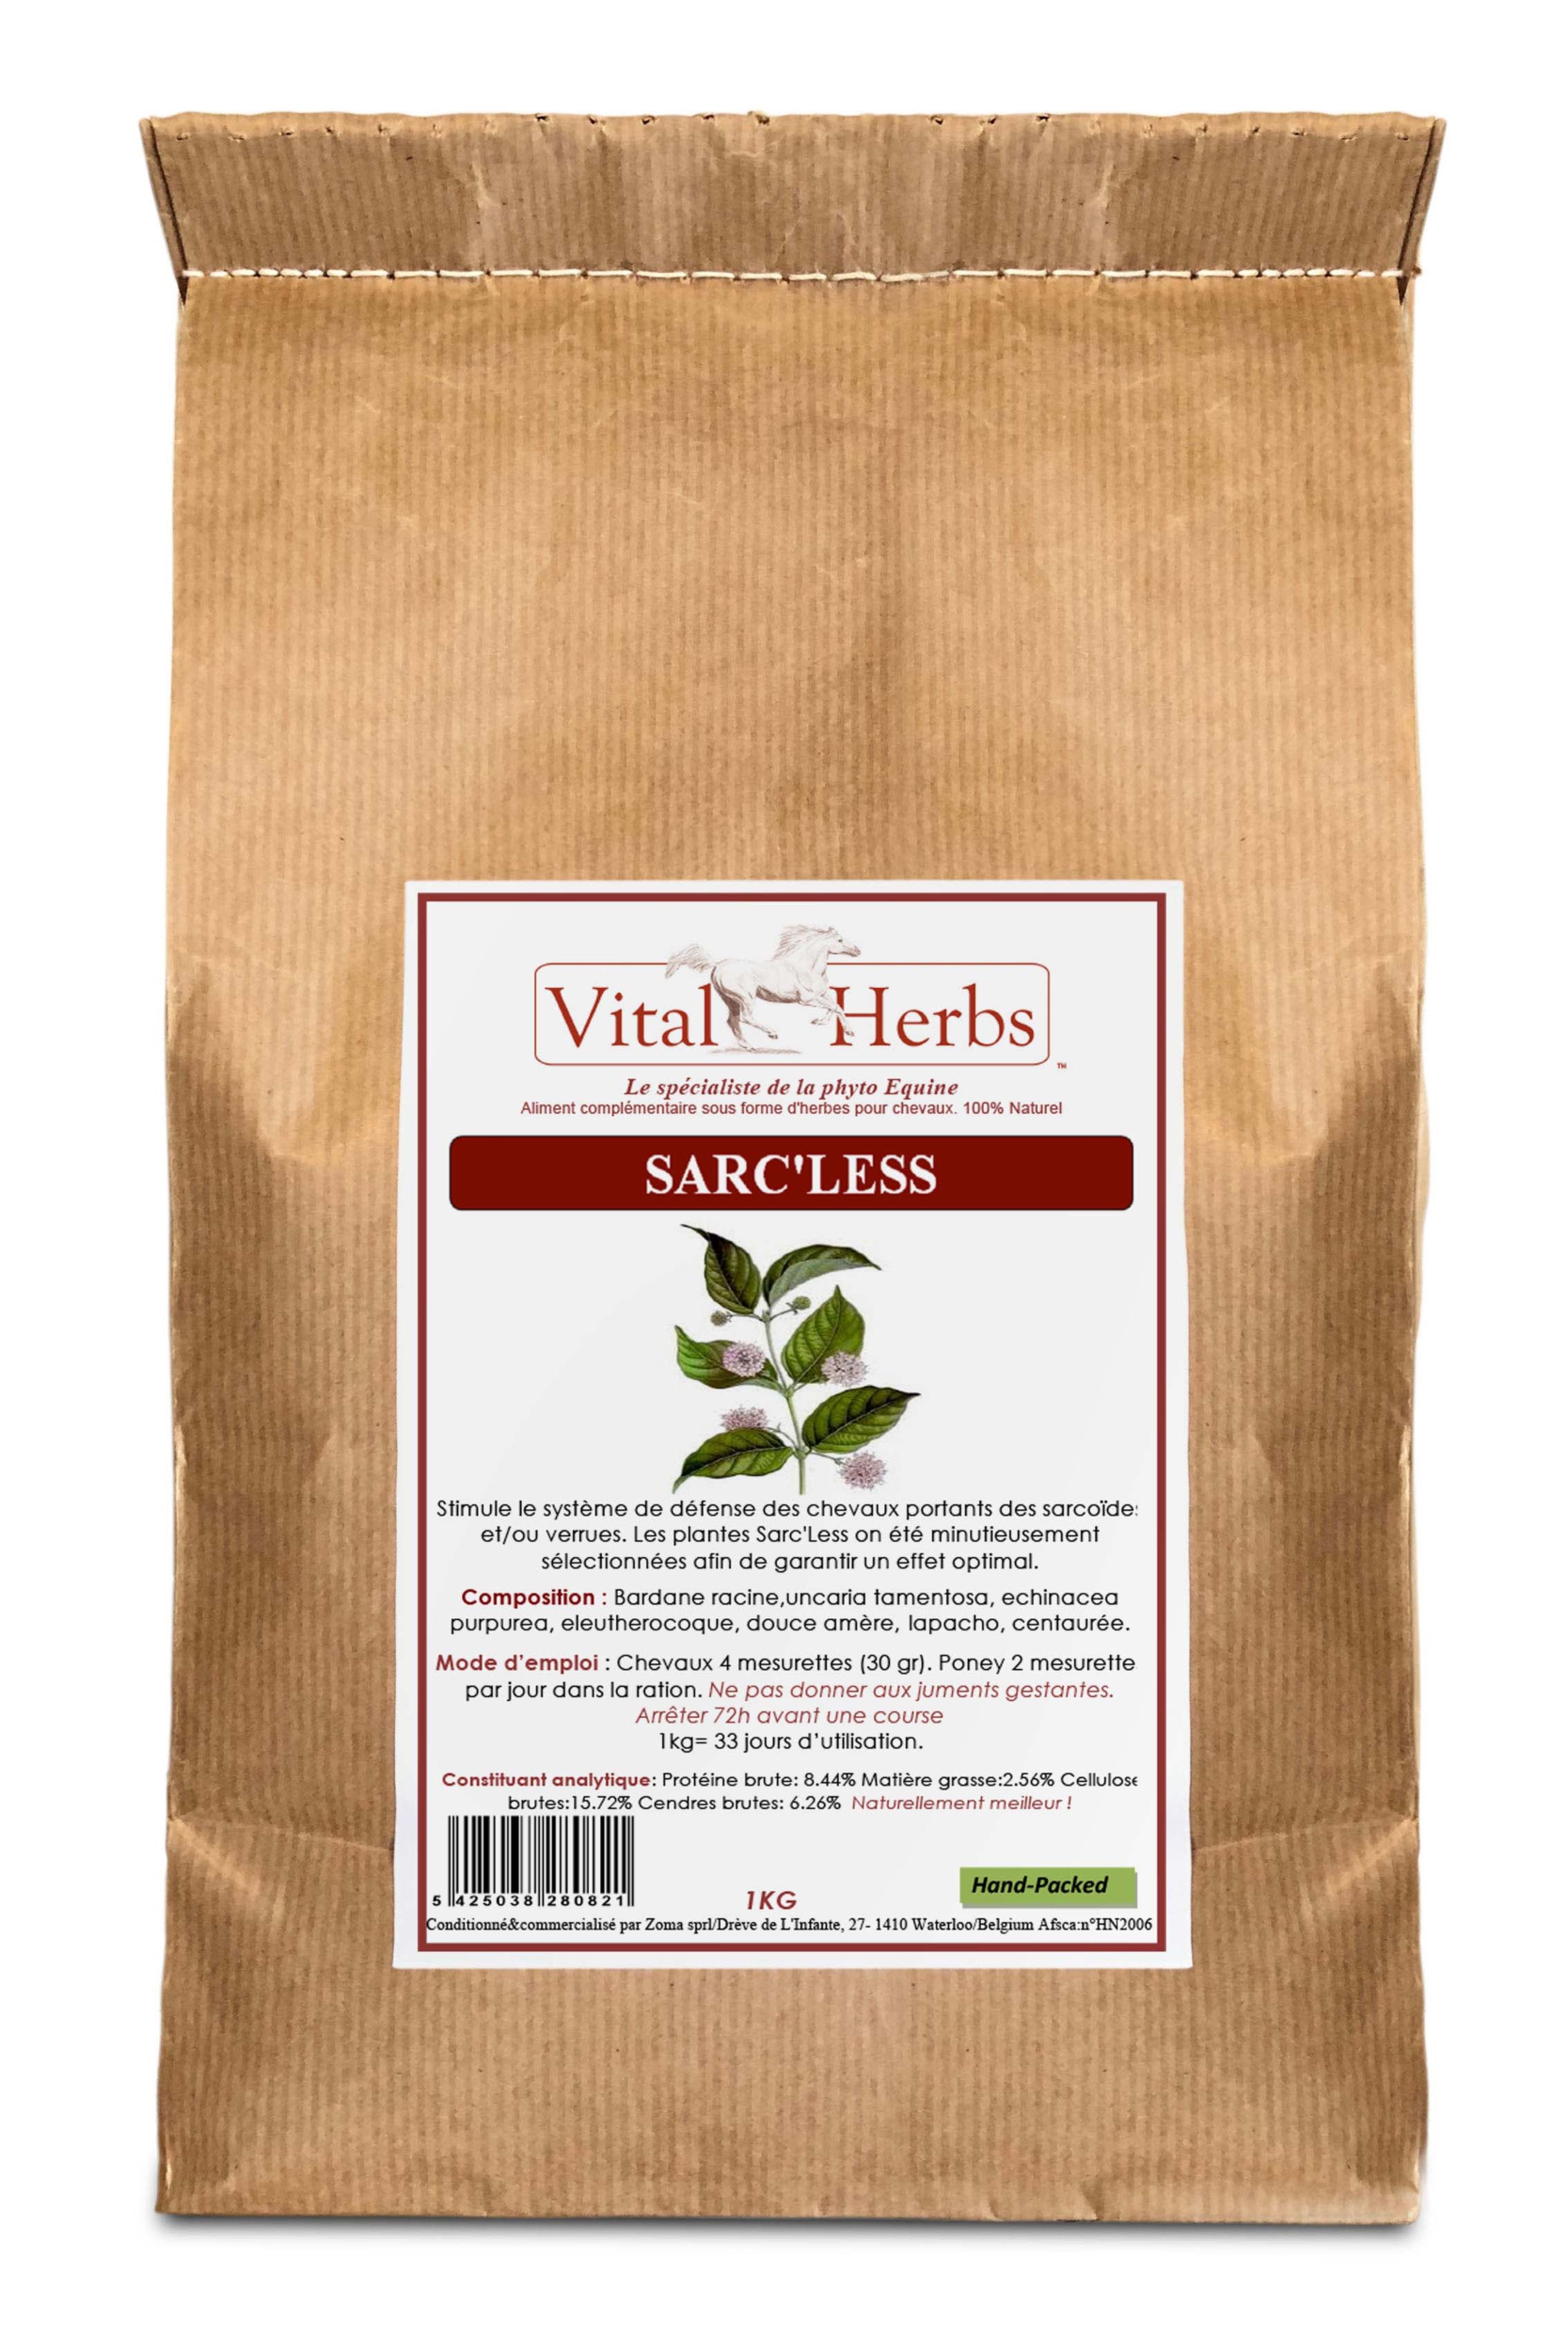 sac-1-kg-sarc-less-vital-herbs-vitalherbs